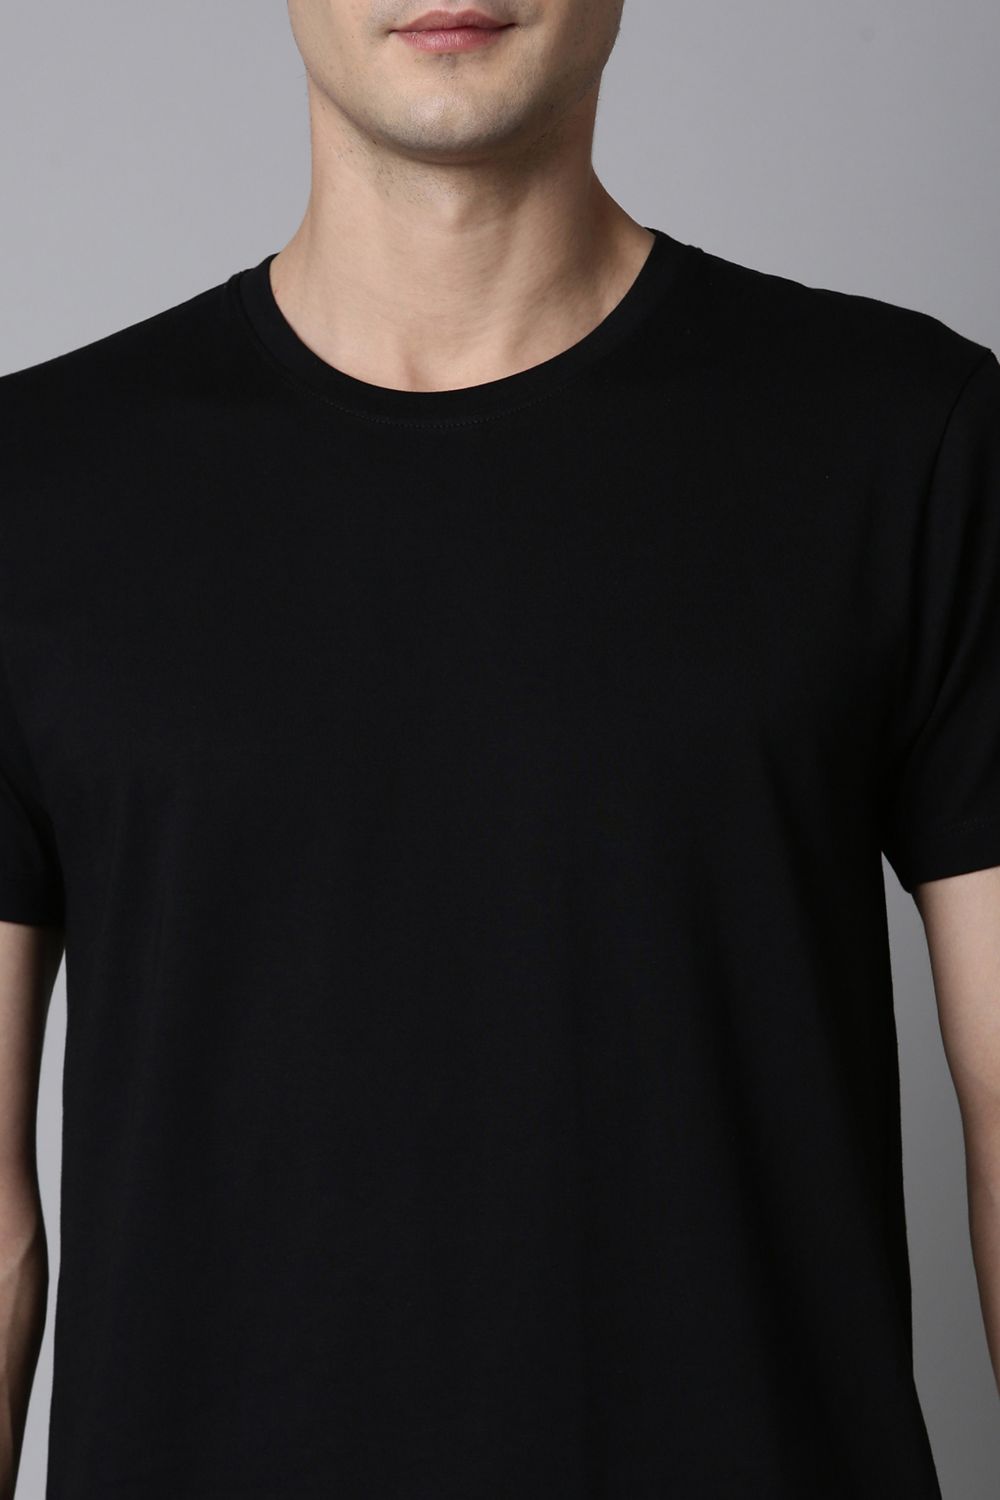 Black - Solid t-shirt T-SHIRT Maxzone Clothing   